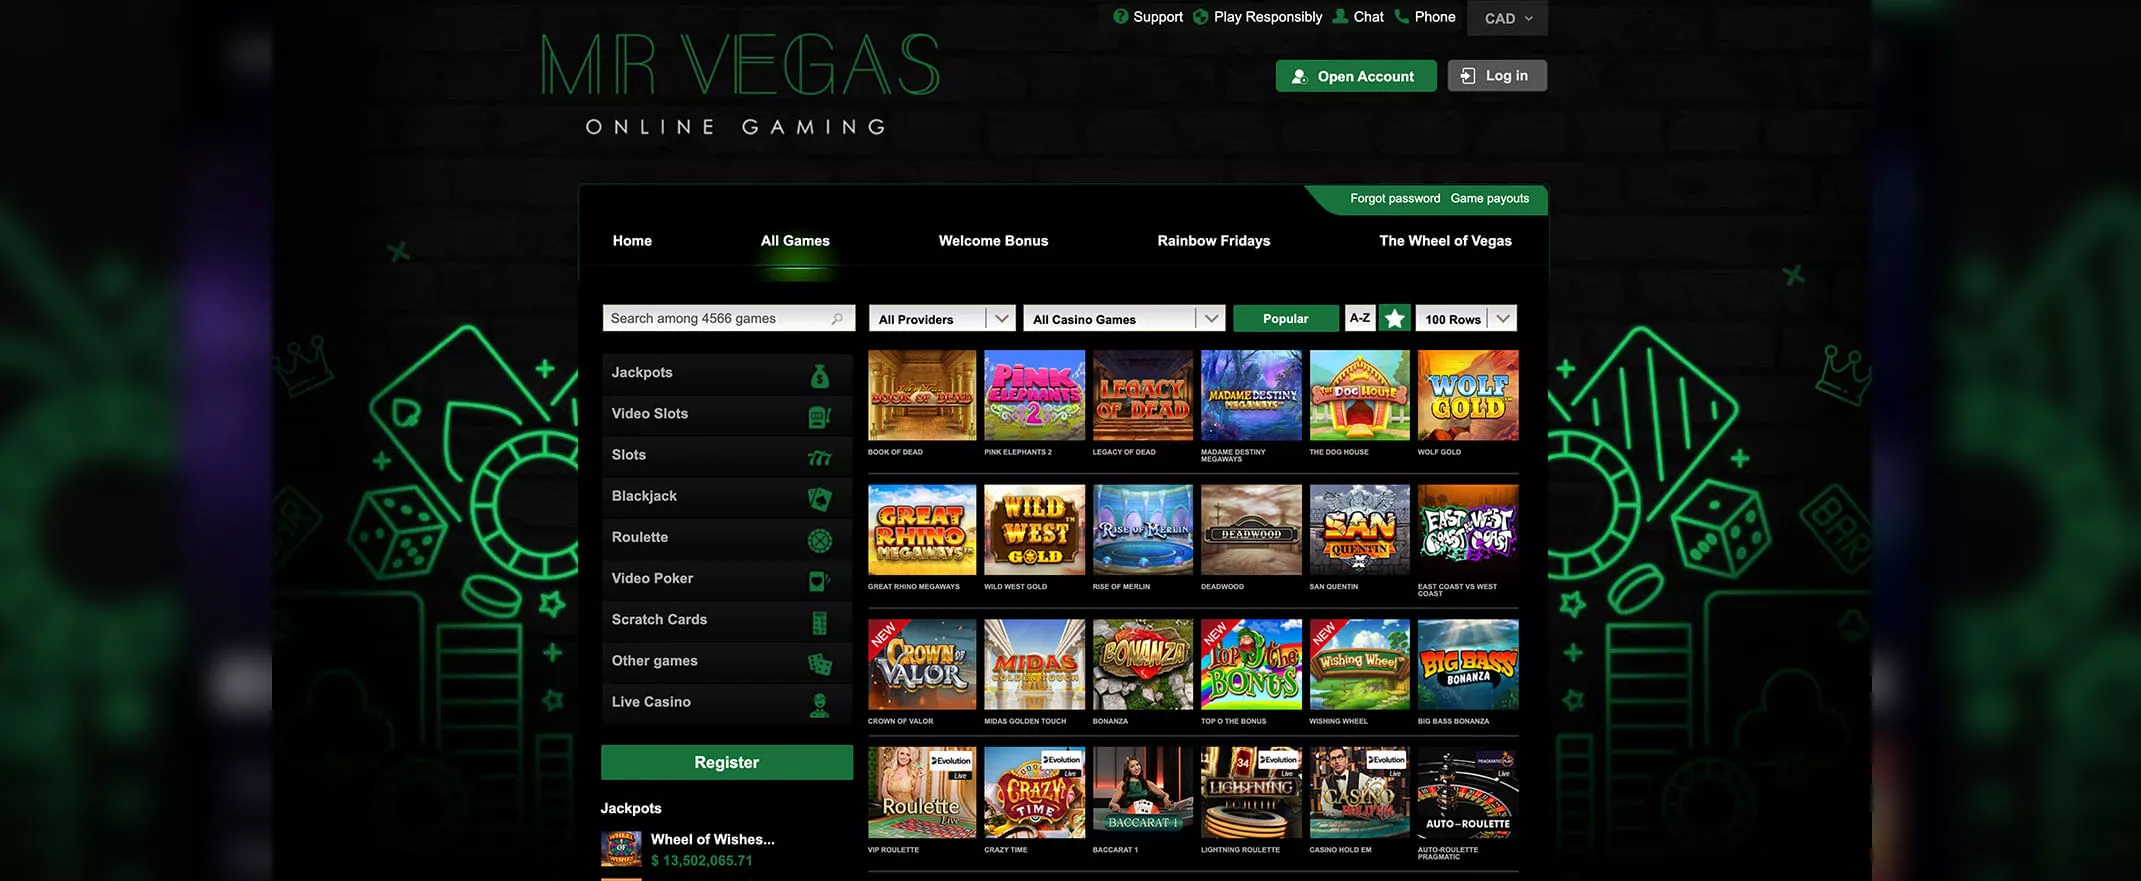 Mr Vegas screenshot of the games